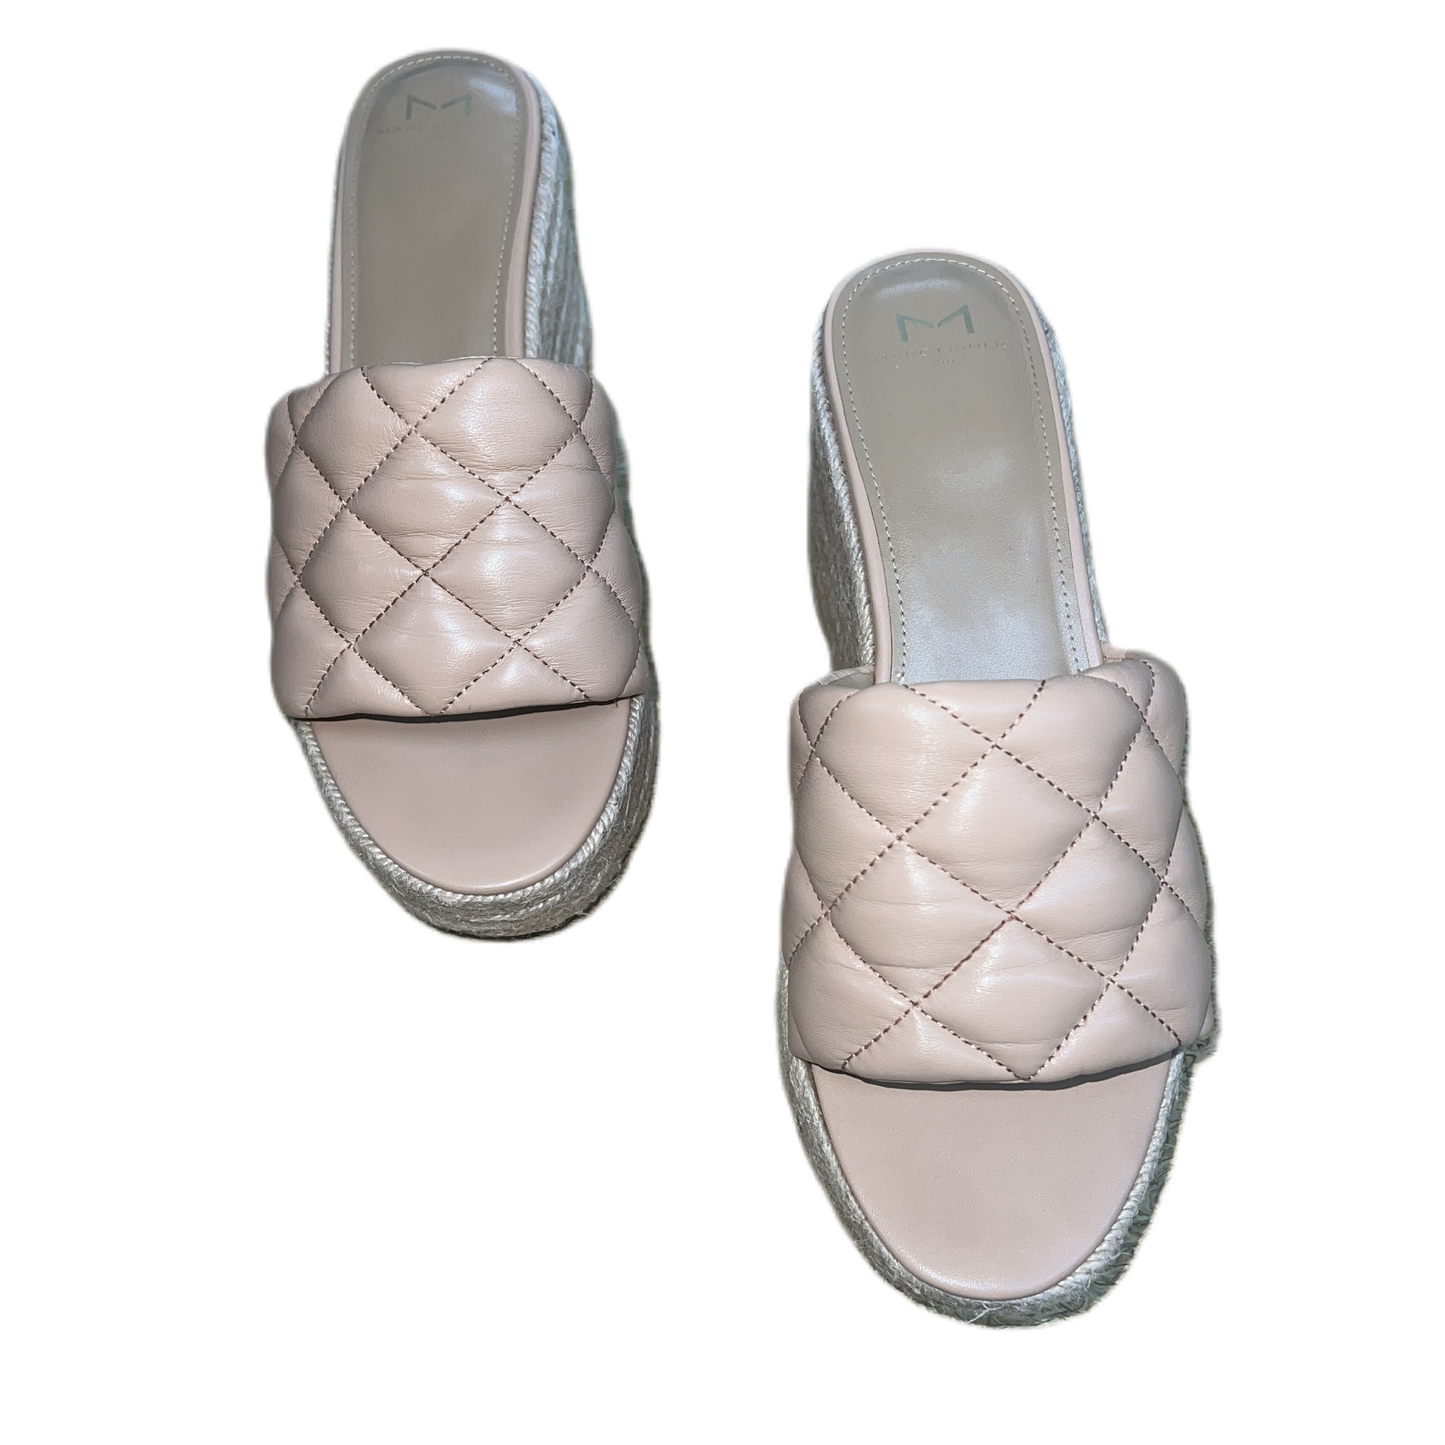 Sandals Heels Platform By Marc Fisher  Size: 9